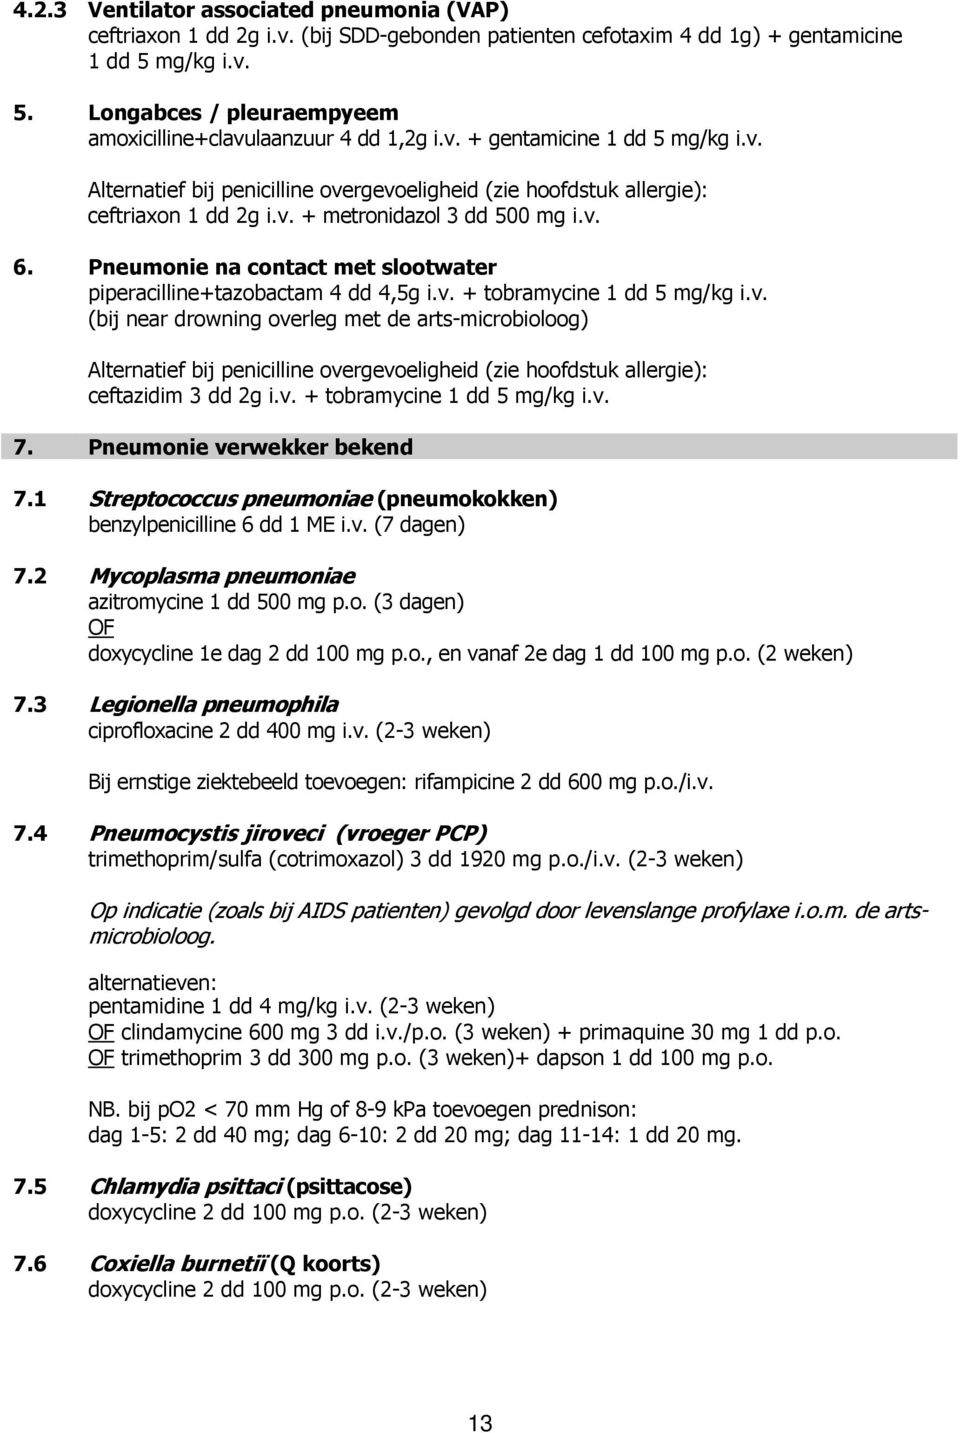 v. + metronidazol 3 dd 500 mg i.v. 6. Pneumonie na contact met slootwater piperacilline+tazobactam 4 dd 4,5g i.v. + tobramycine 1 dd 5 mg/kg i.v. (bij near drowning overleg met de arts-microbioloog) Alternatief bij penicilline overgevoeligheid (zie hoofdstuk allergie): ceftazidim 3 dd 2g i.